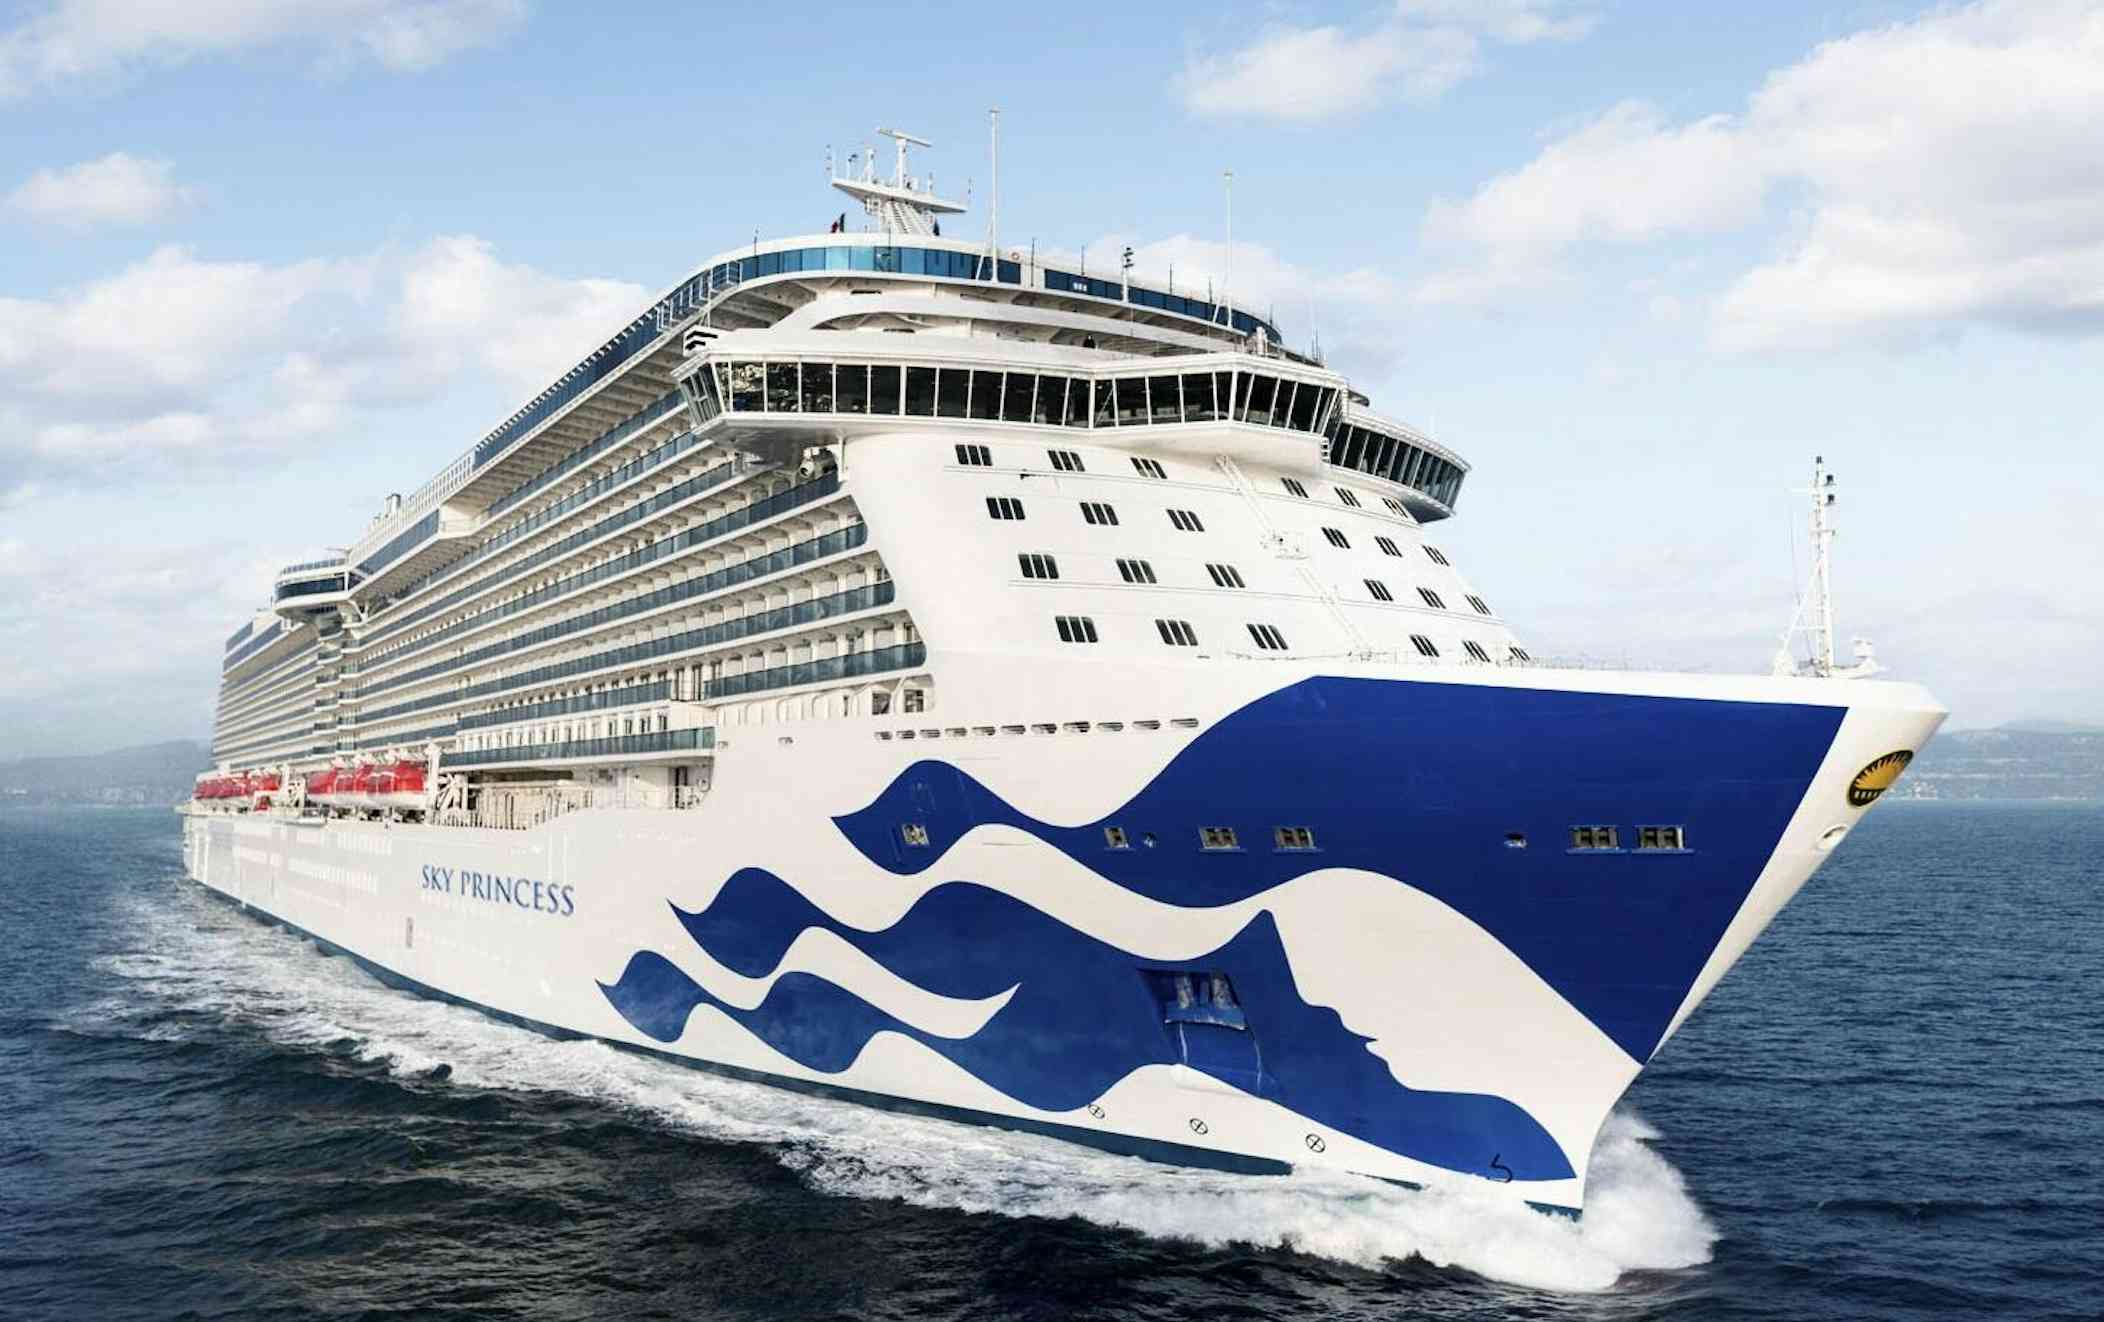 Century Casinos Opens Three Additional Casinos on Cruise Ships